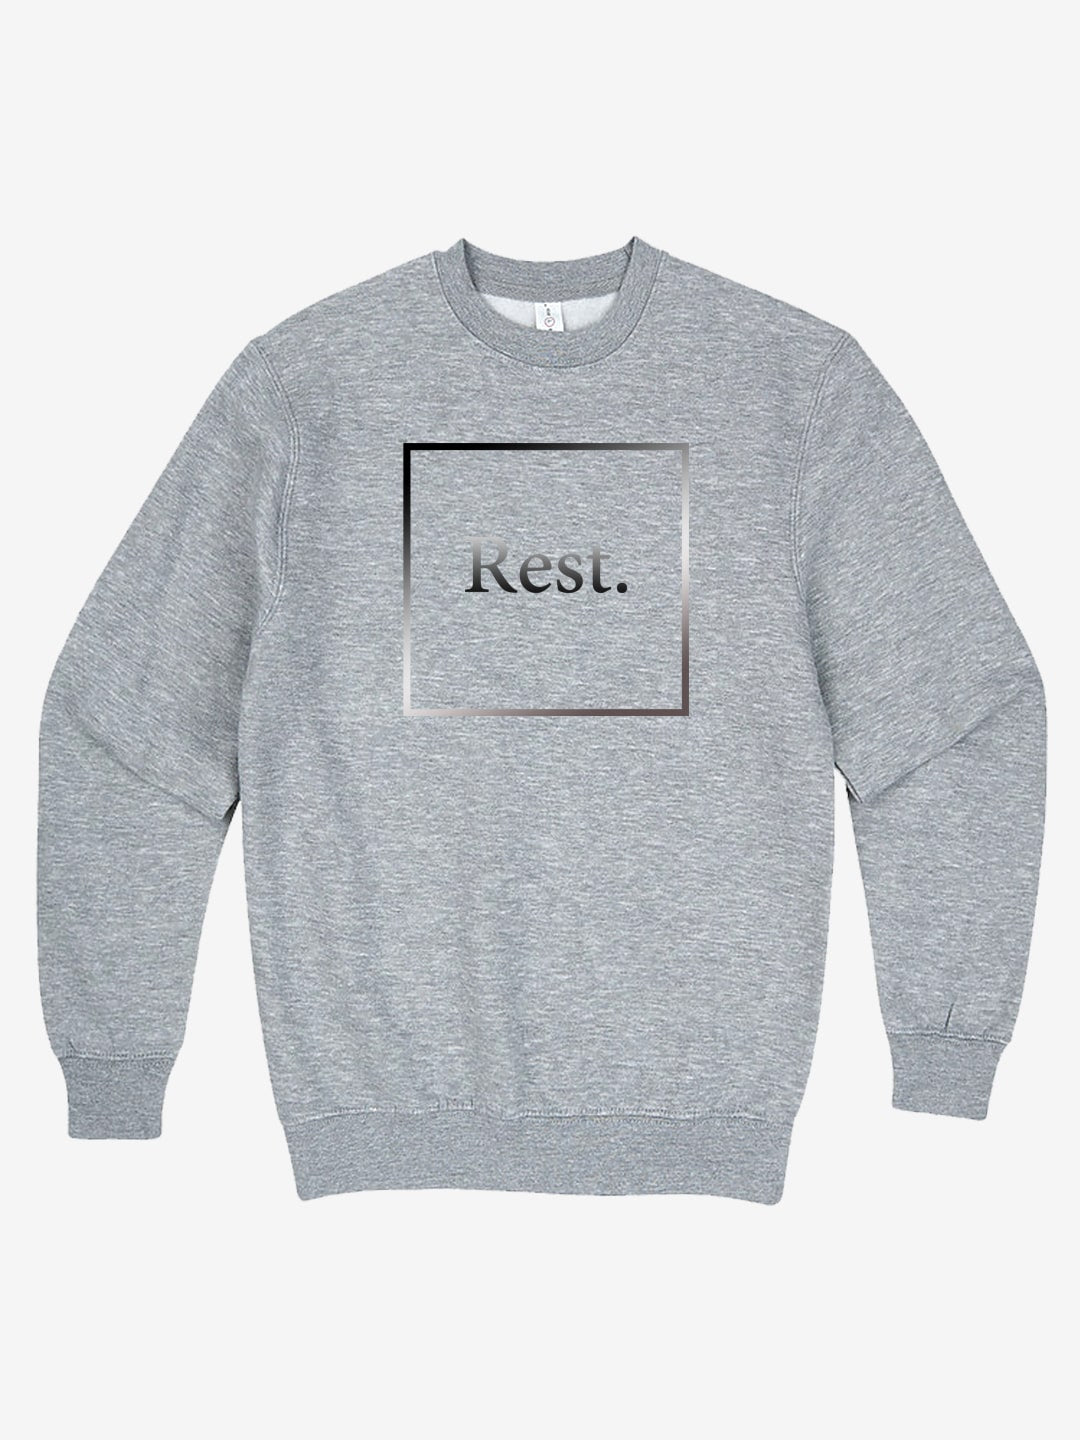 Rejoice & Do Good Christian Apparel - Men's Grey Heather Crew Sweatshirt based on Genesis' concept of Rest 